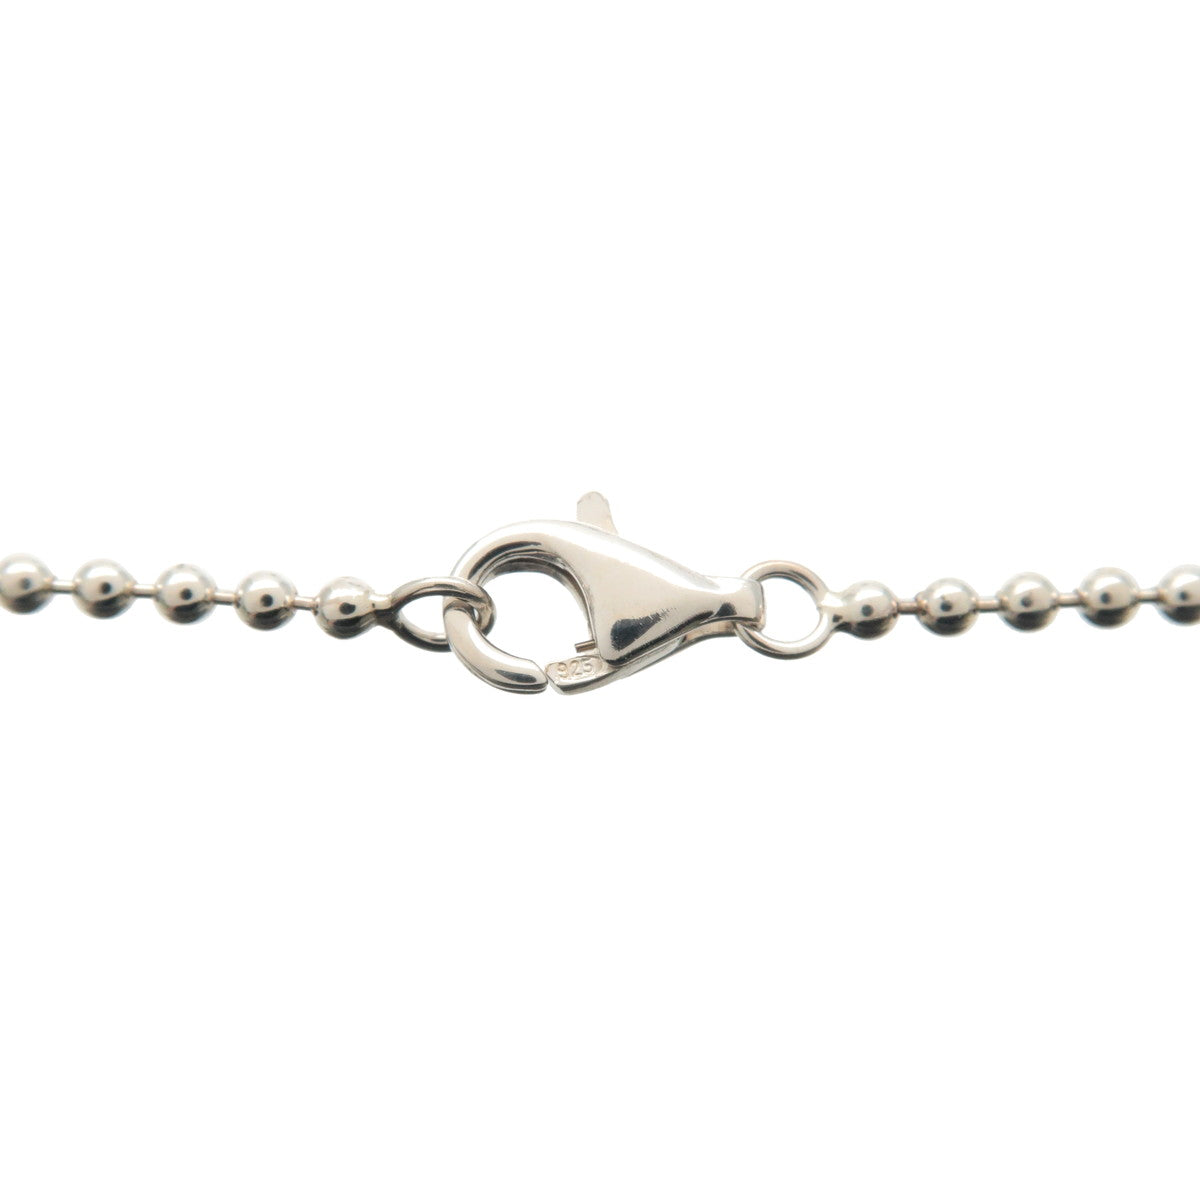 Tiffany&Co. Roman Cross Necklace SV925 Silver